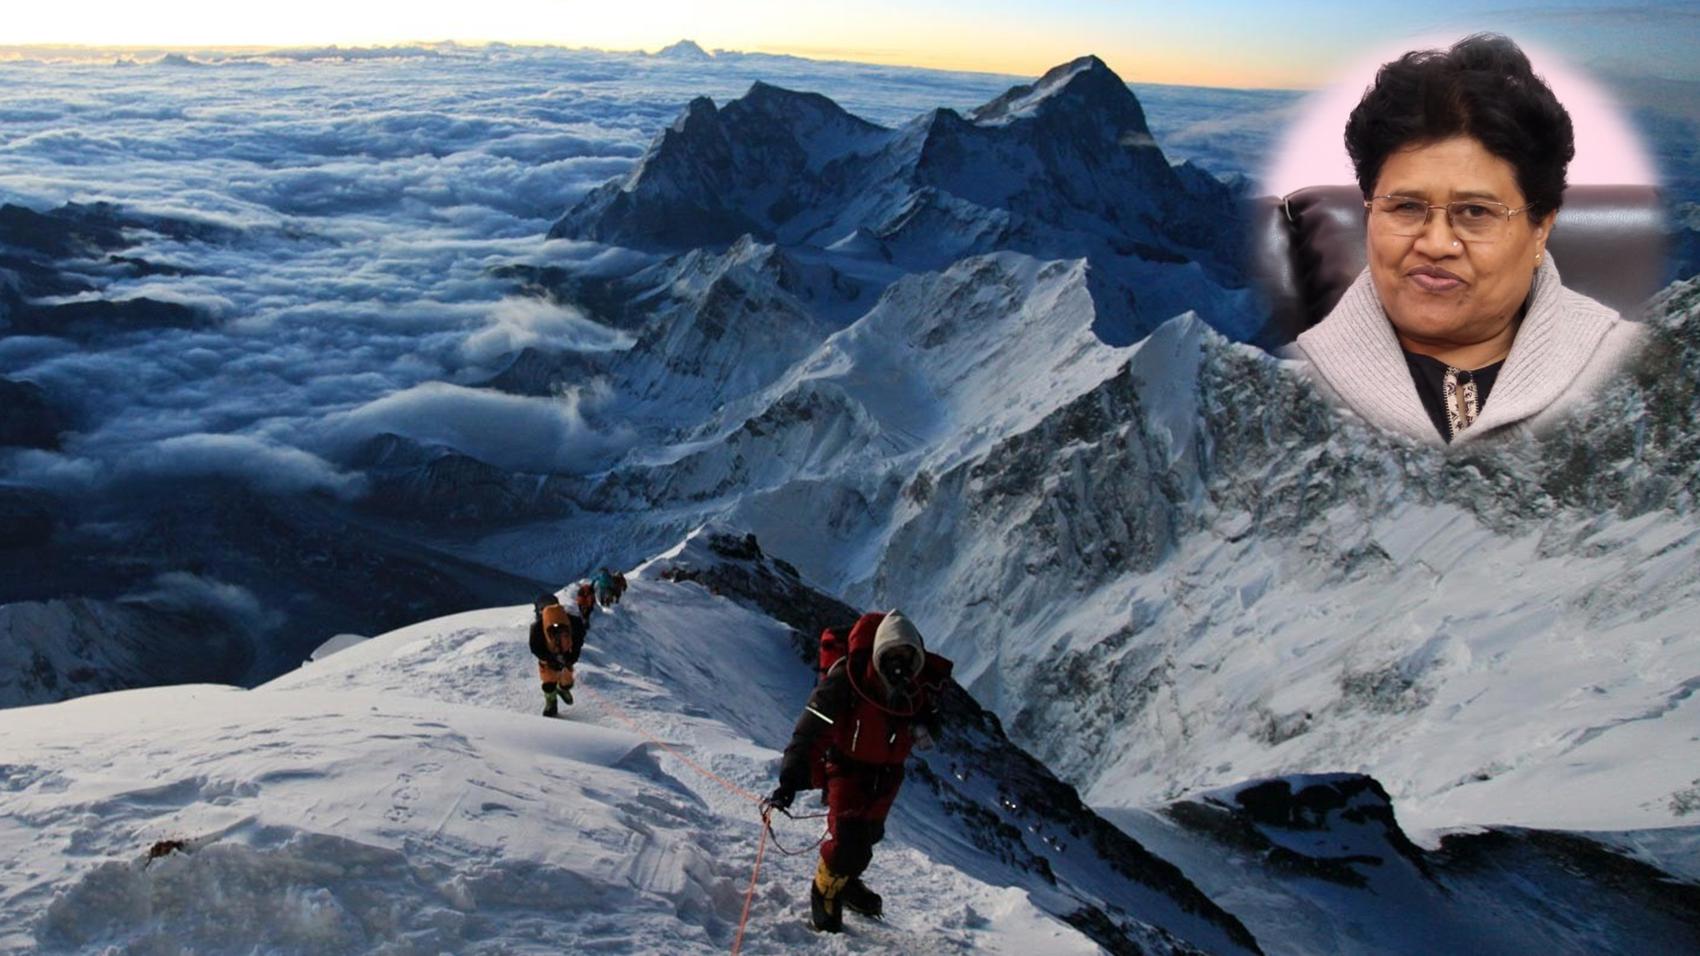 Career in Mountaineering